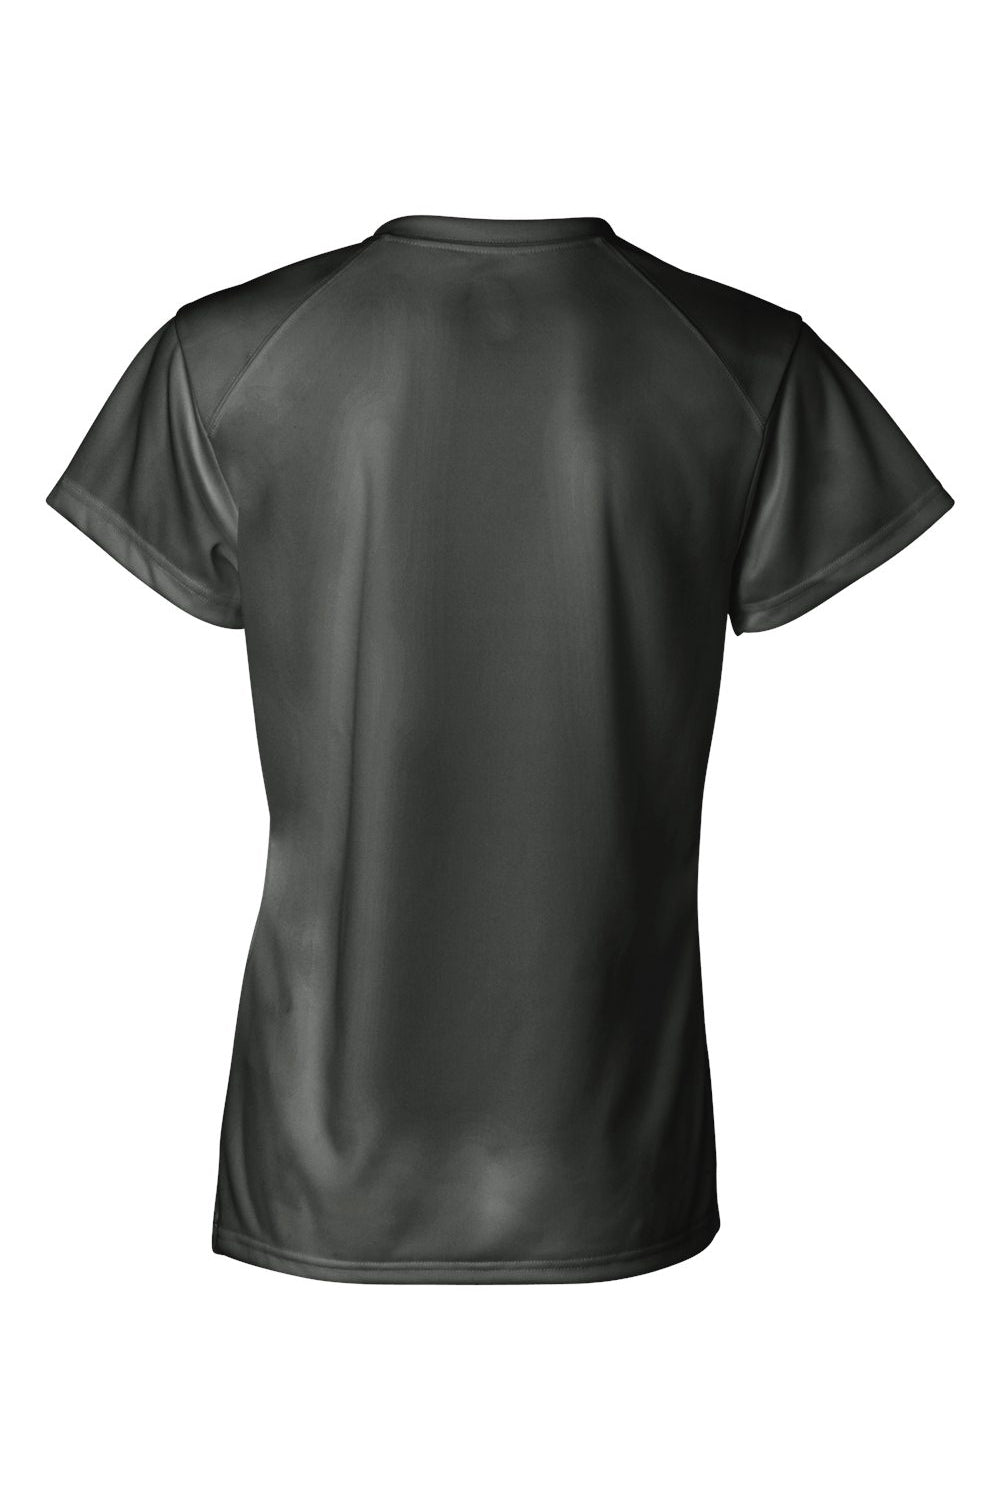 Badger 4160 Womens B-Core Moisture Wicking Short Sleeve Crewneck T-Shirt Graphite Grey Flat Back